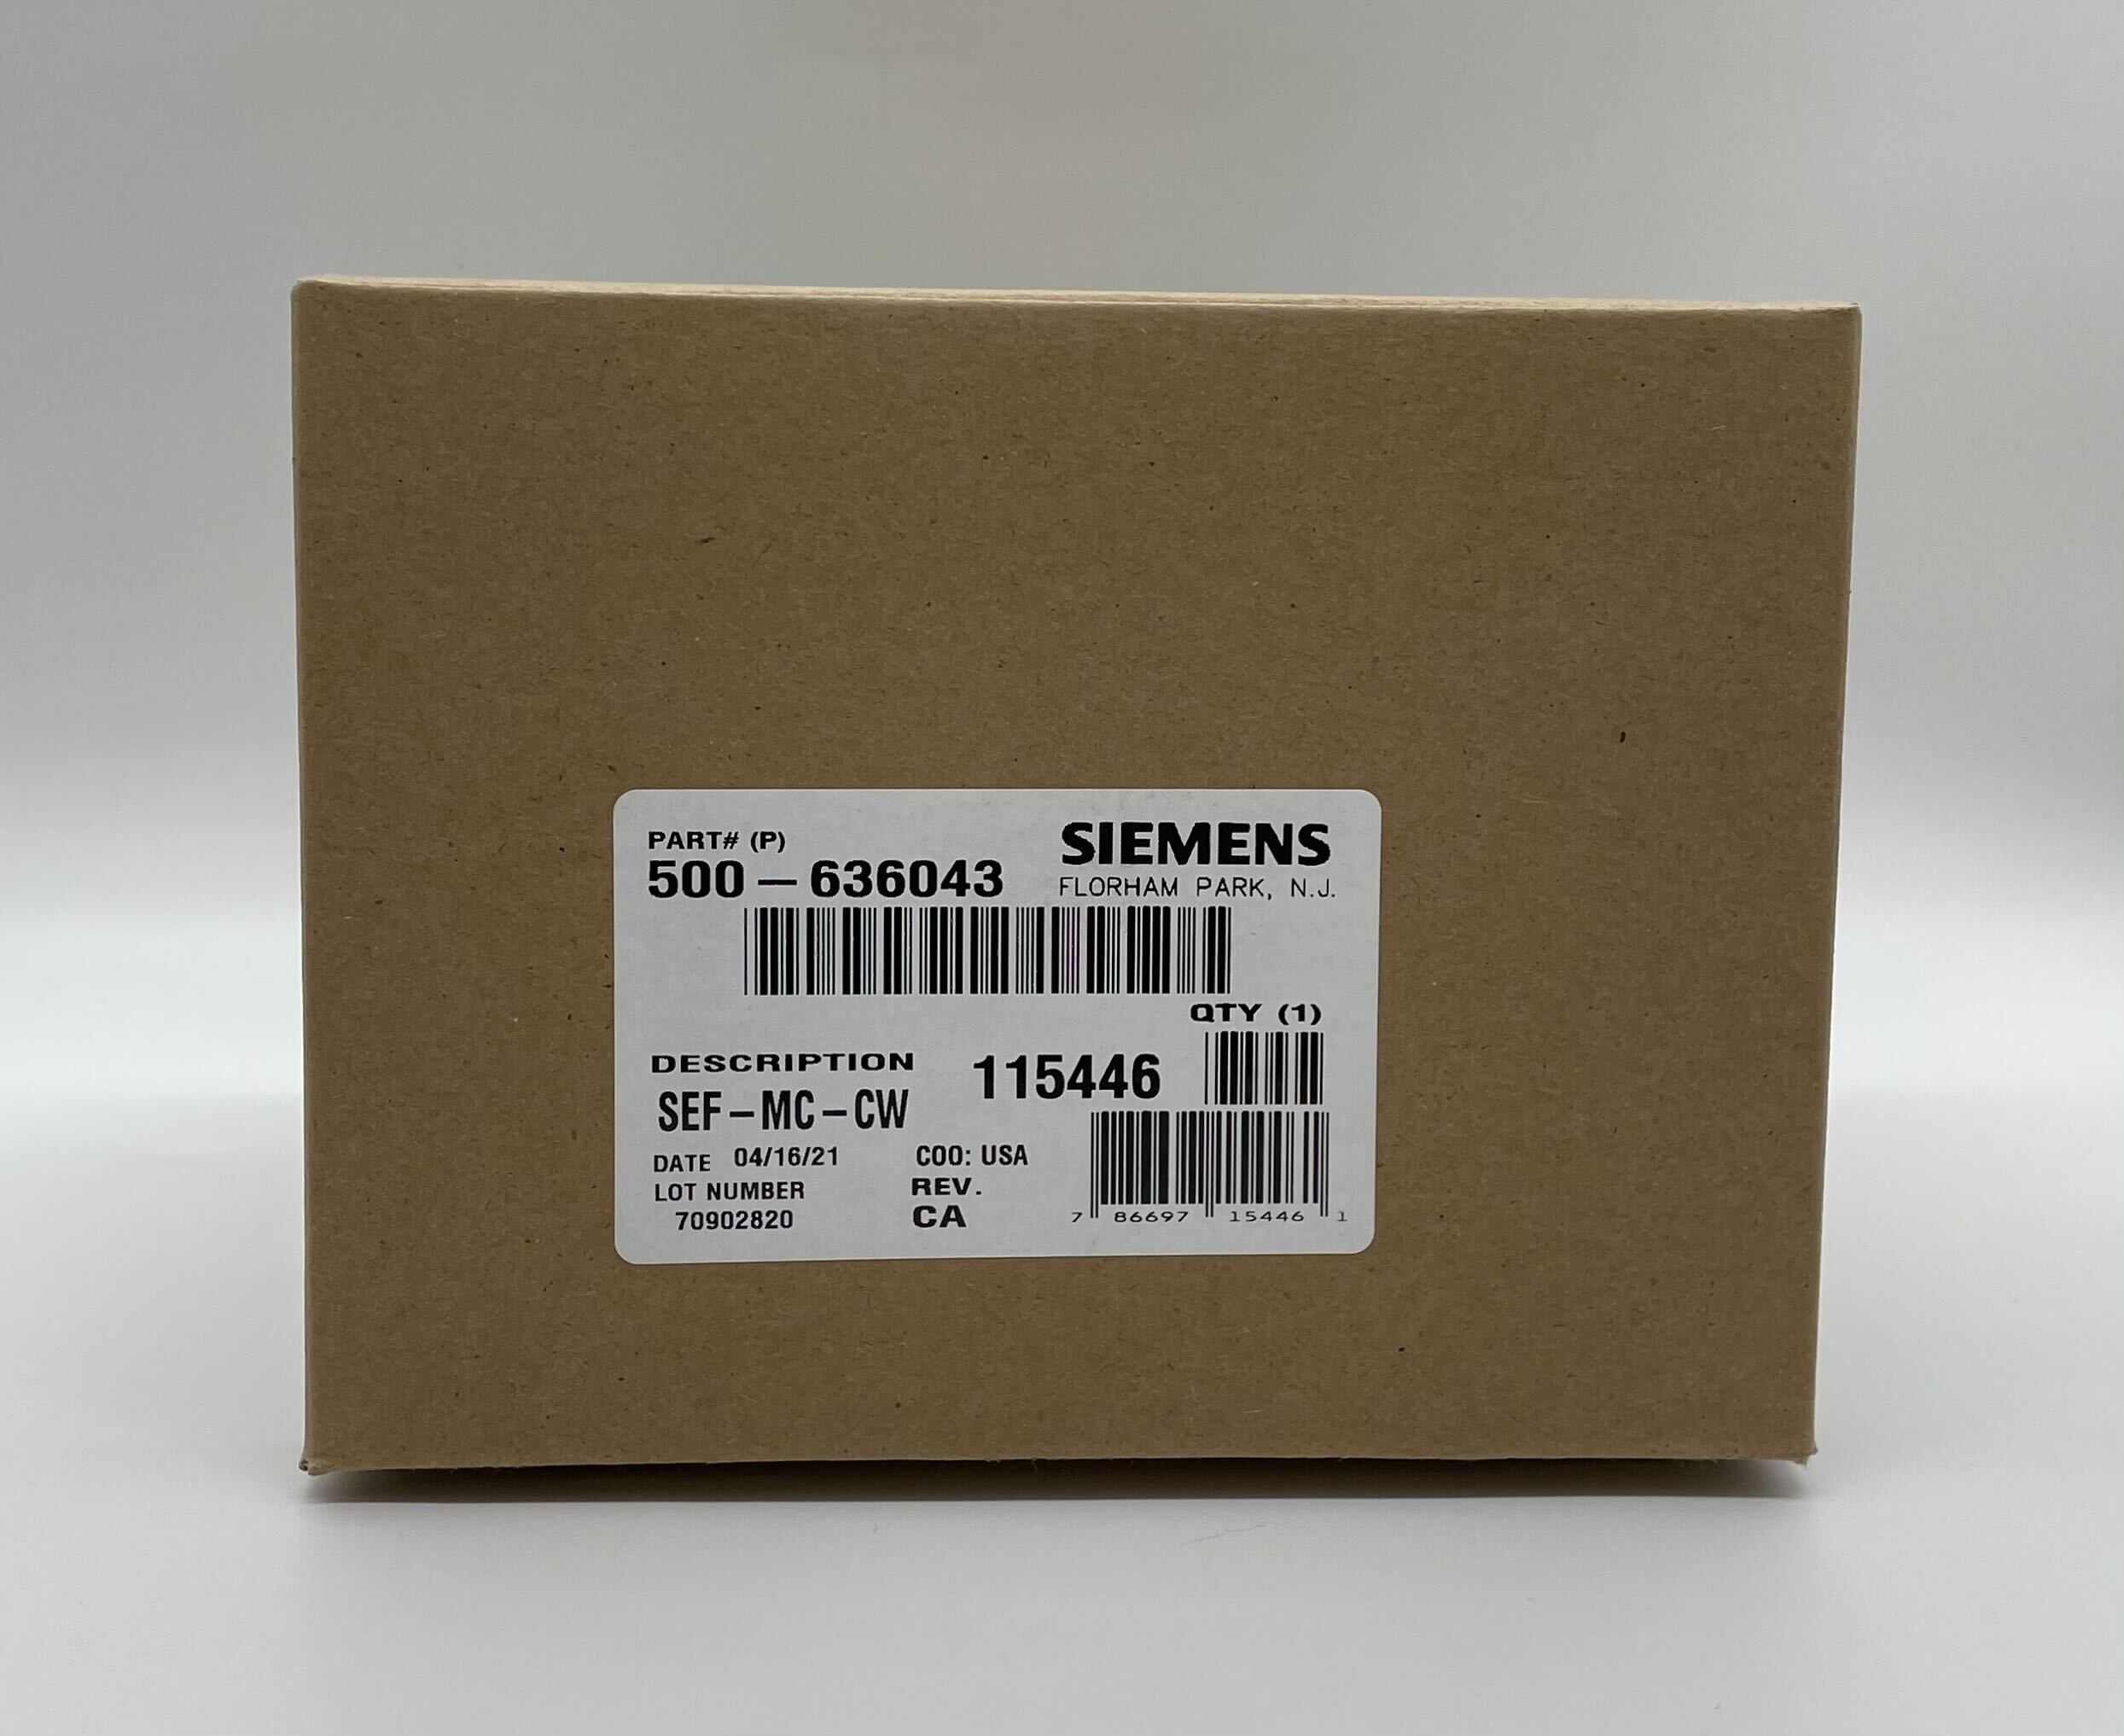 Siemens SEF-MC-CW